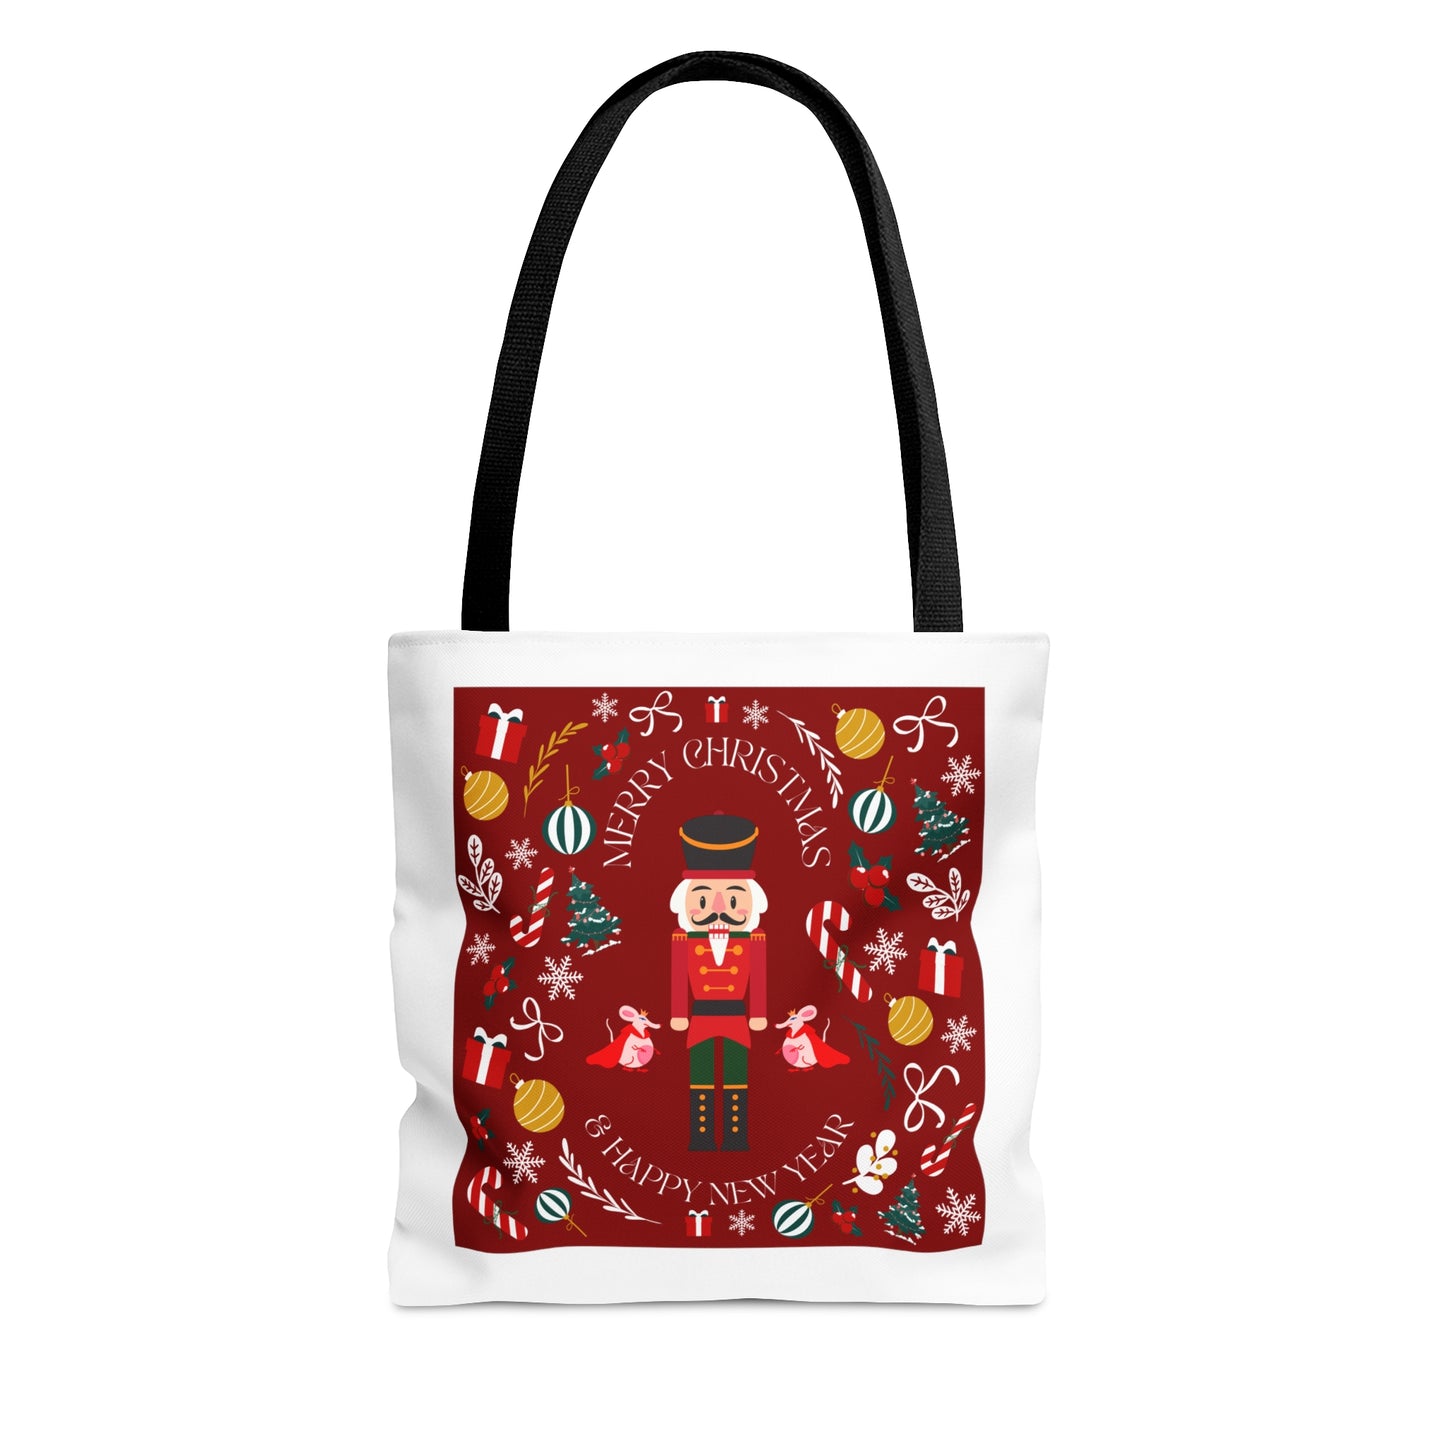 Merry Christmas with Santa Printed Tote Bag